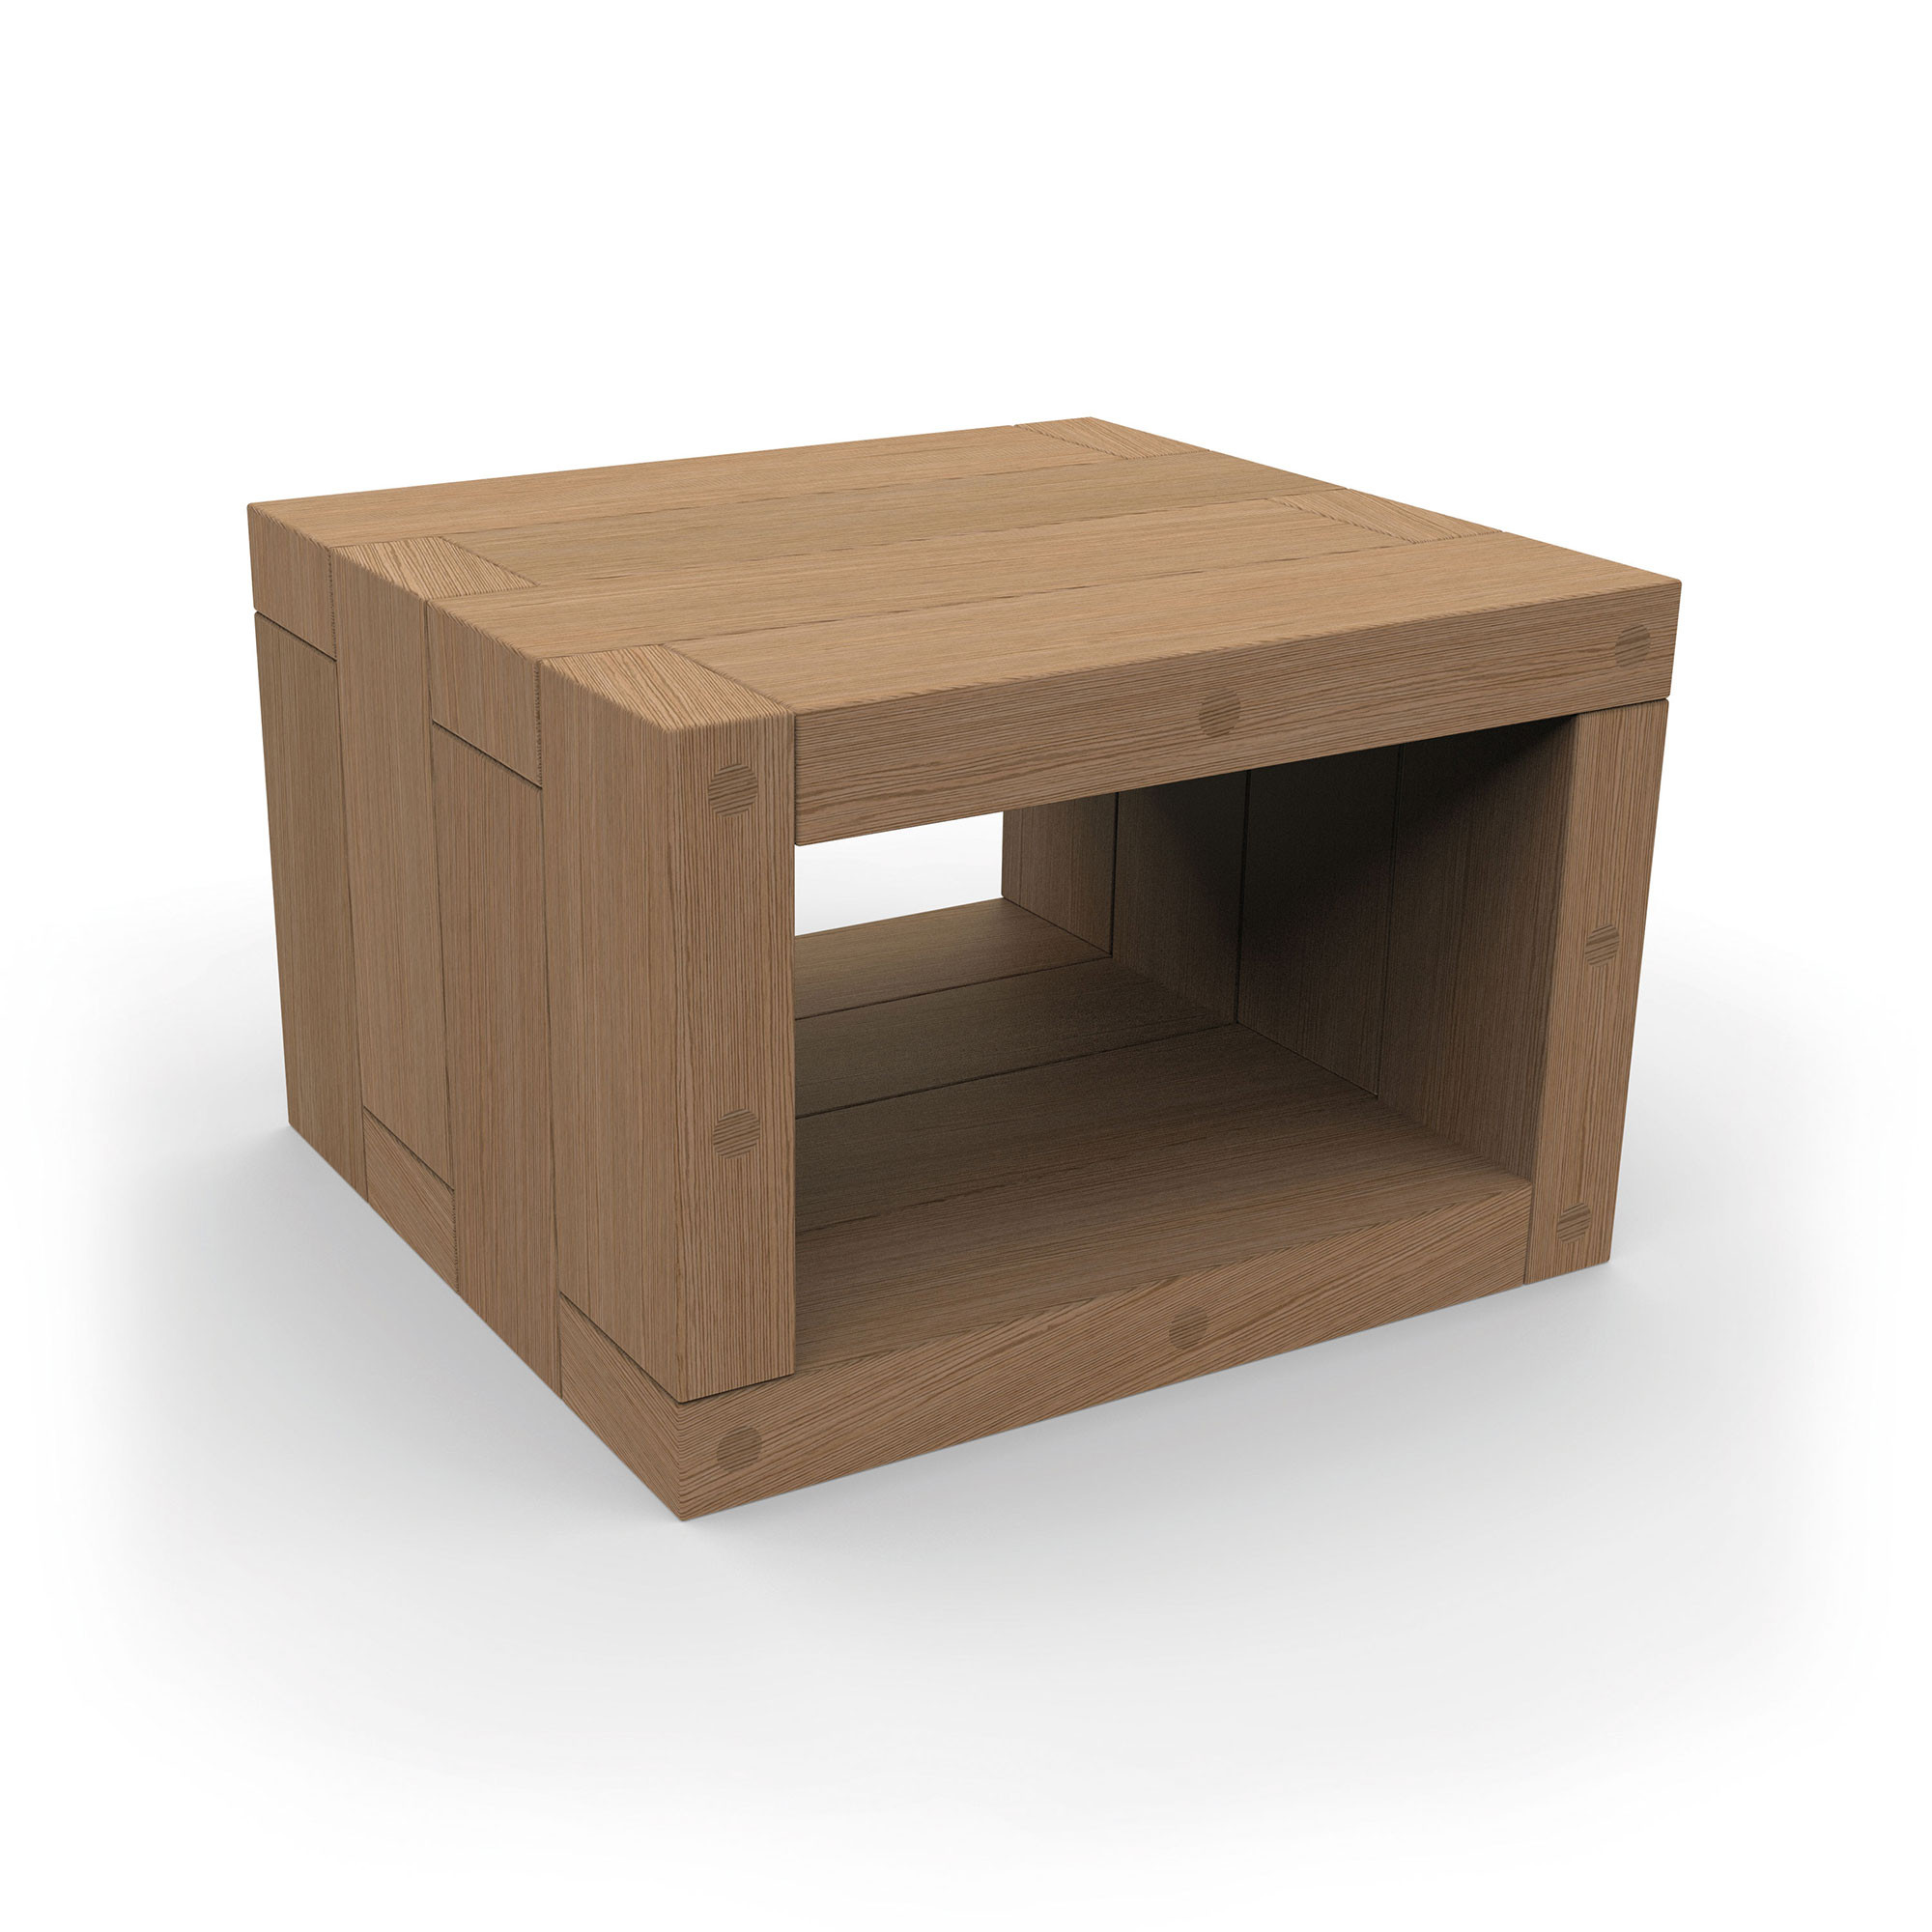 Modular Box Cube Seat : Open